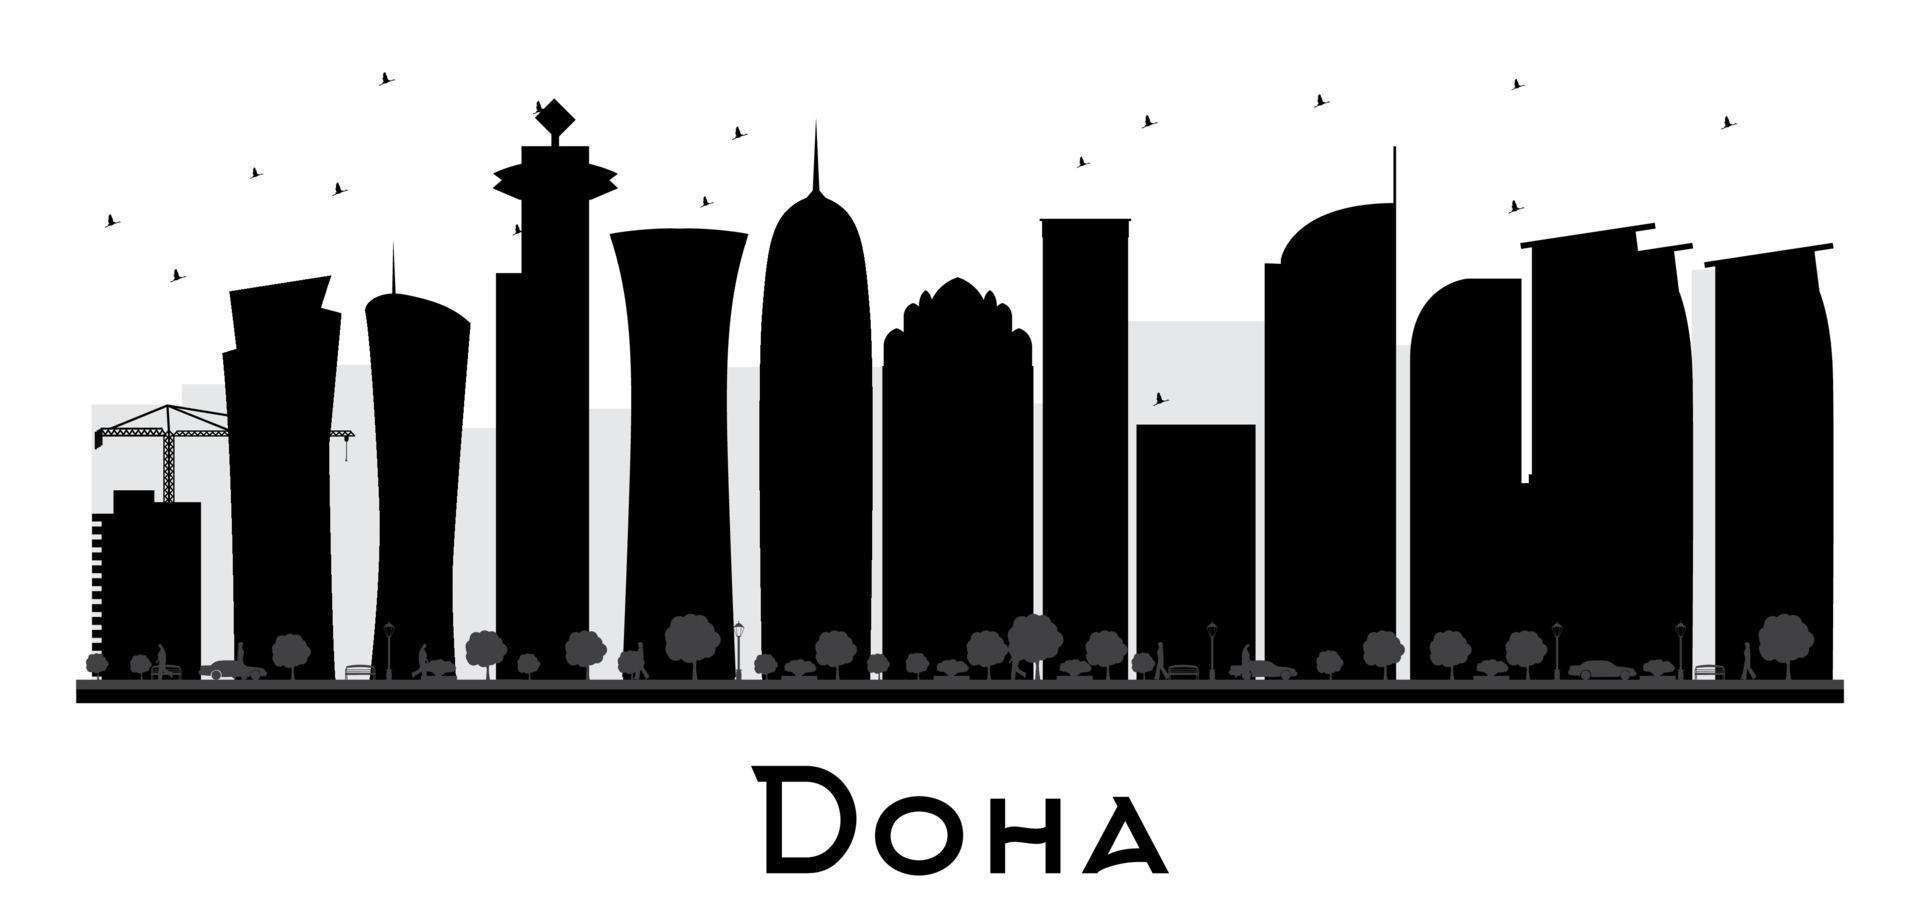 Doha City skyline black and white silhouette vector